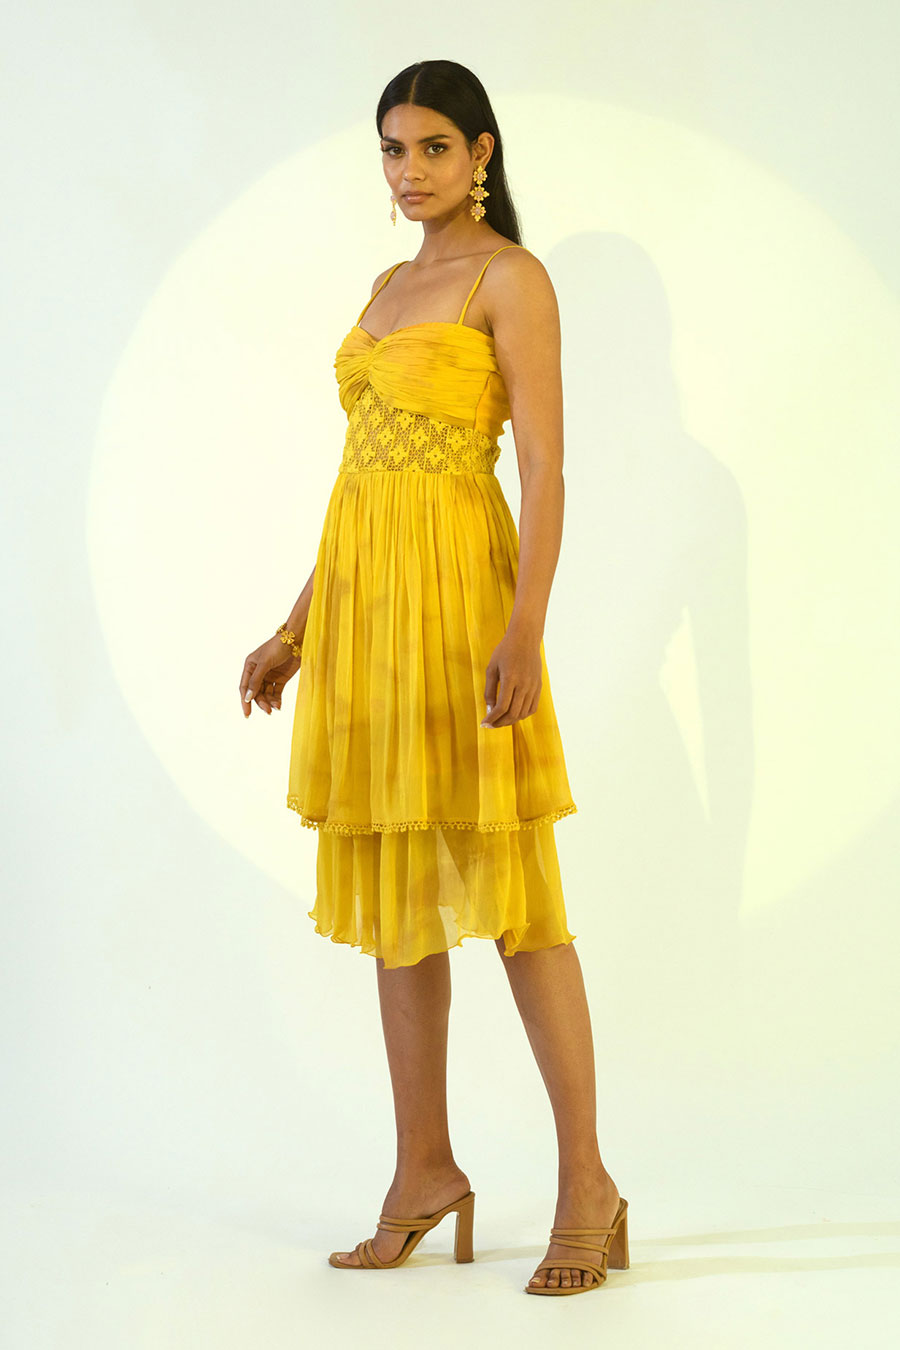 ZOE - Yellow Tie-Dye Lace Strappy Dress